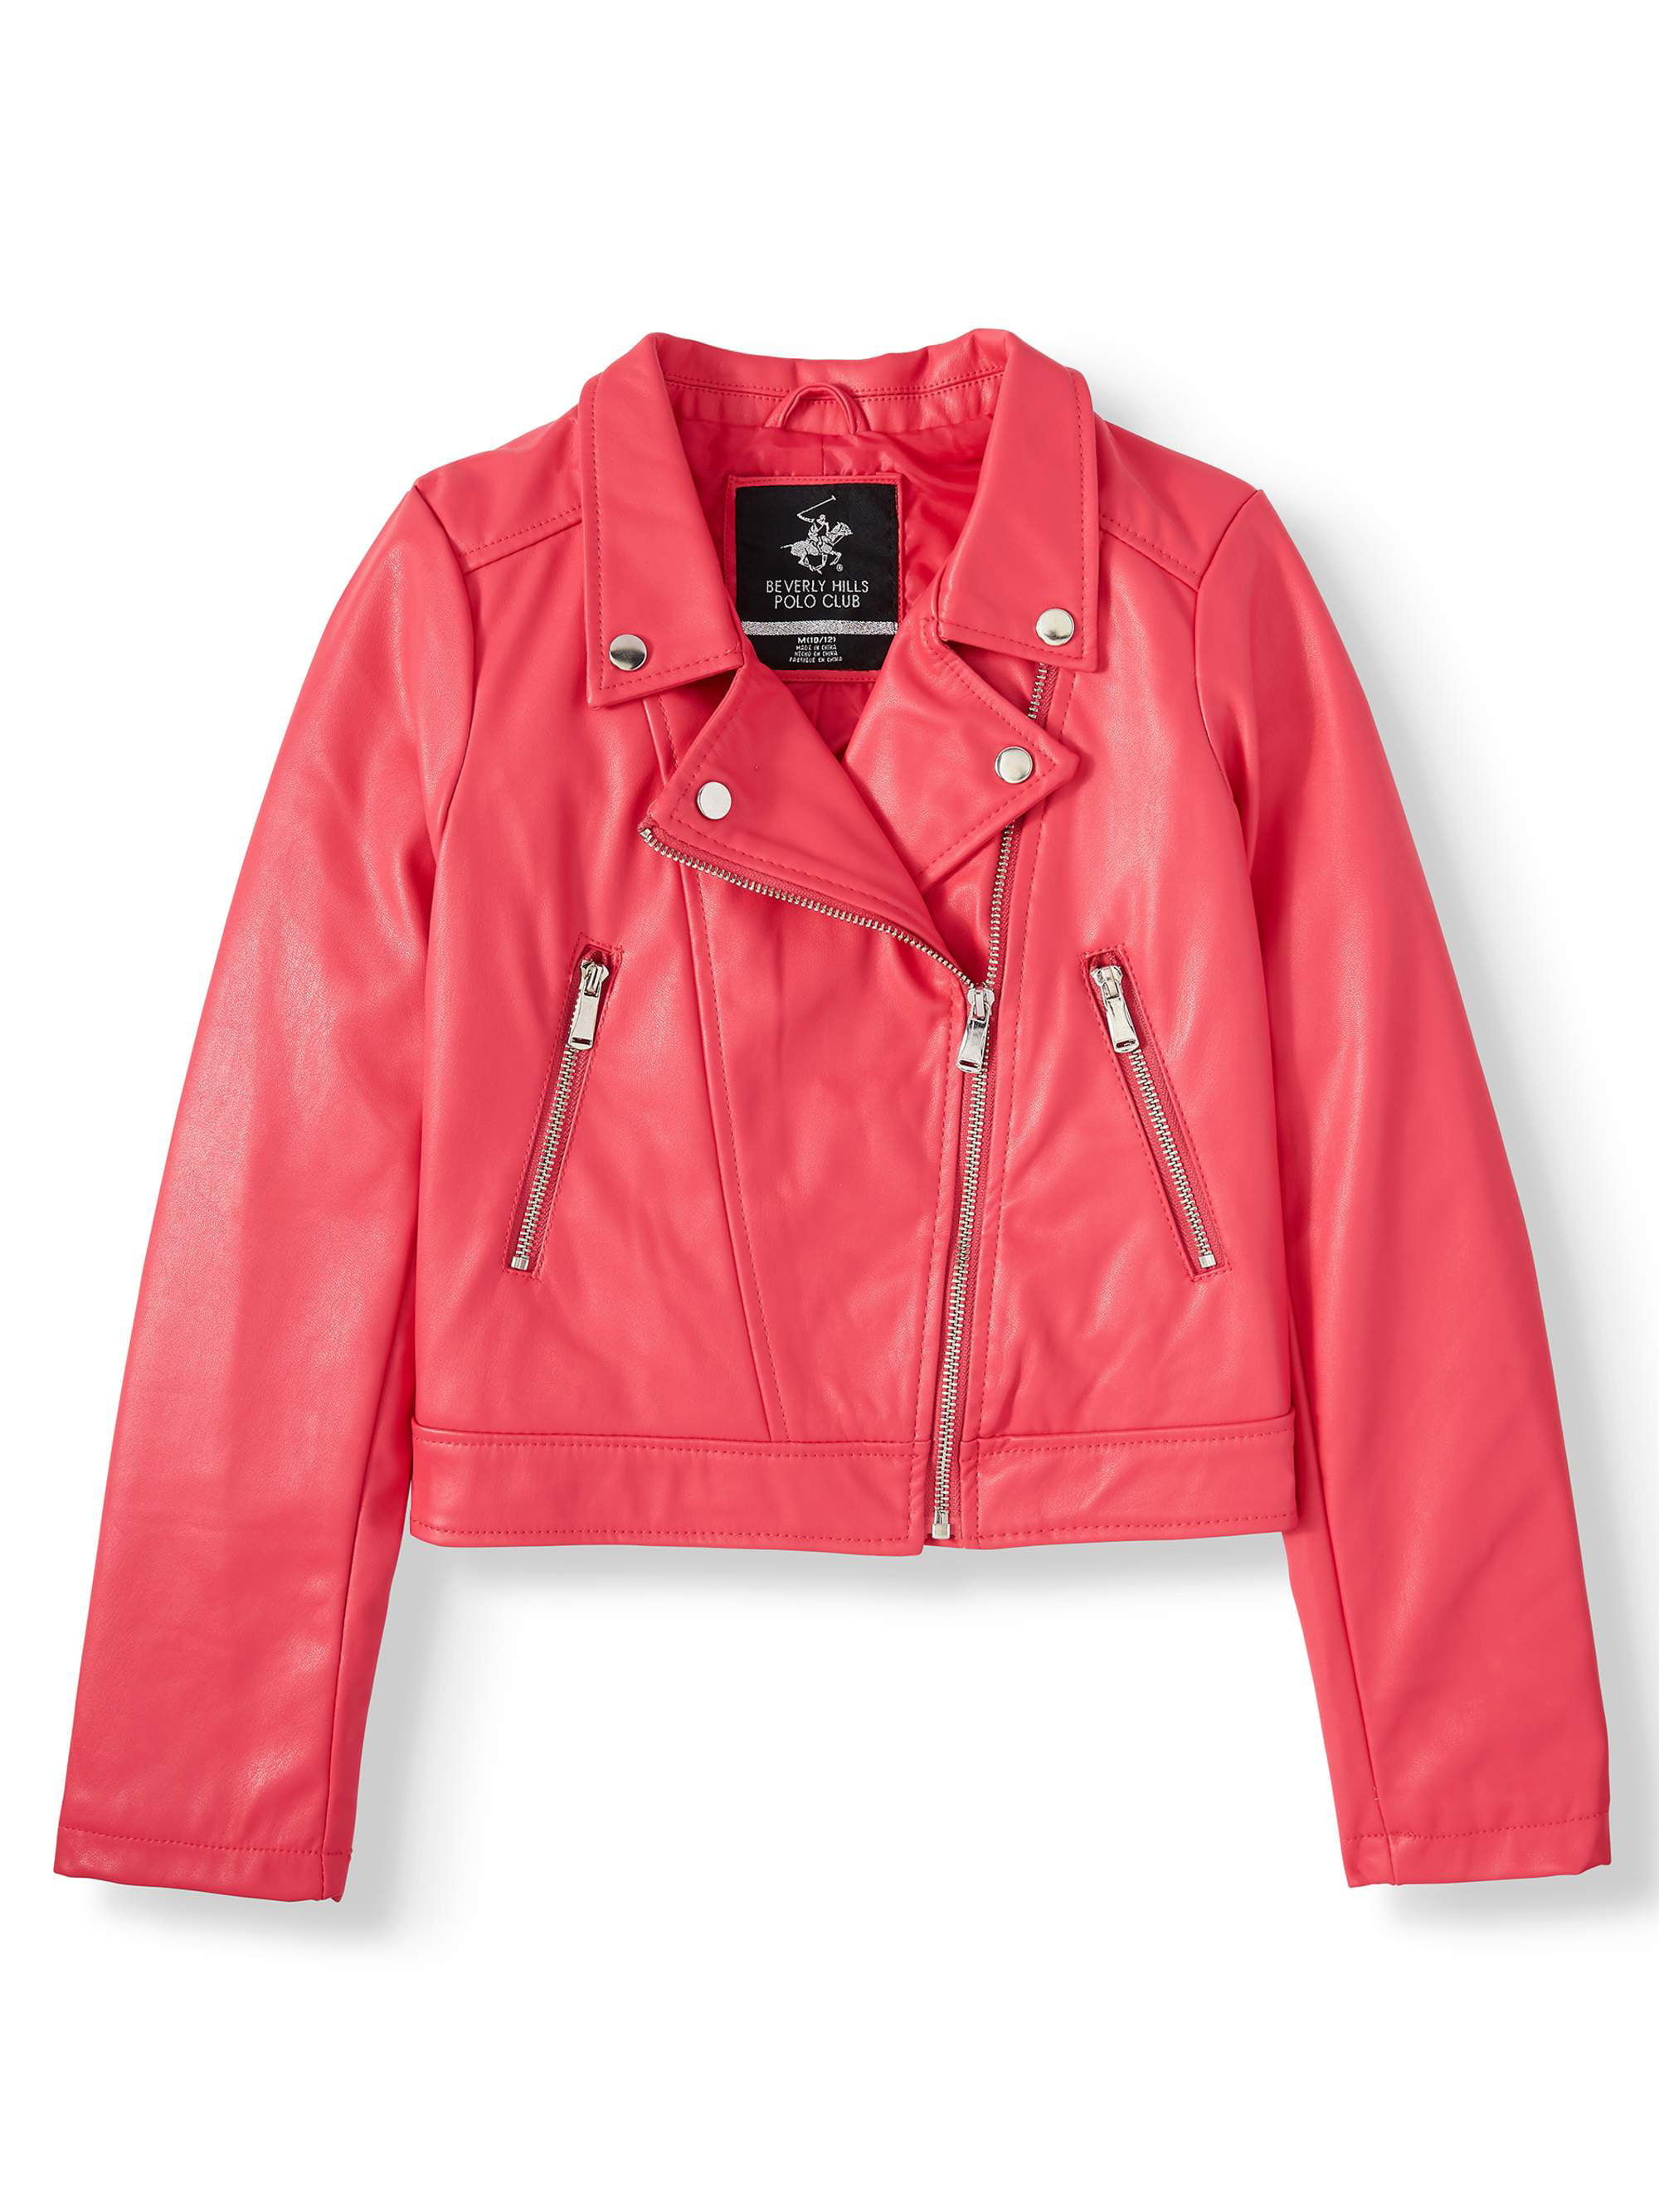 Beverly Hills Polo Club Faux Leather Moto Jacket (Big Girls) - Walmart.com